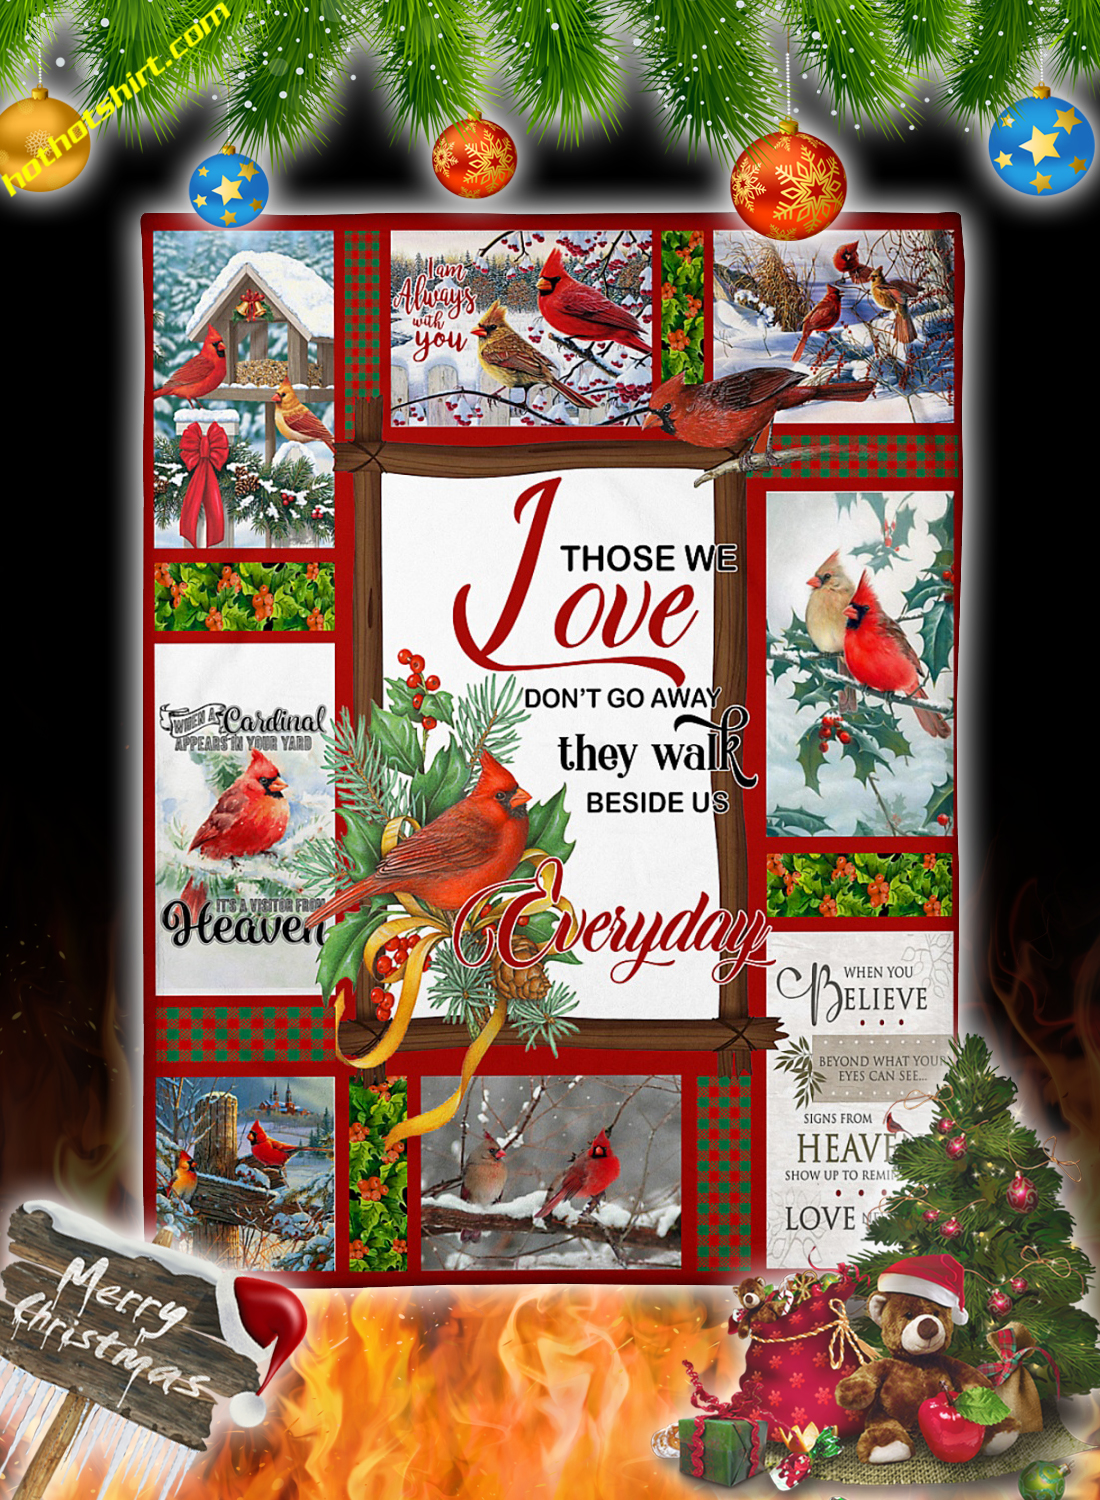 Cardinal bird Thos we love don’t go away they walk beside us everyday christmas blanket